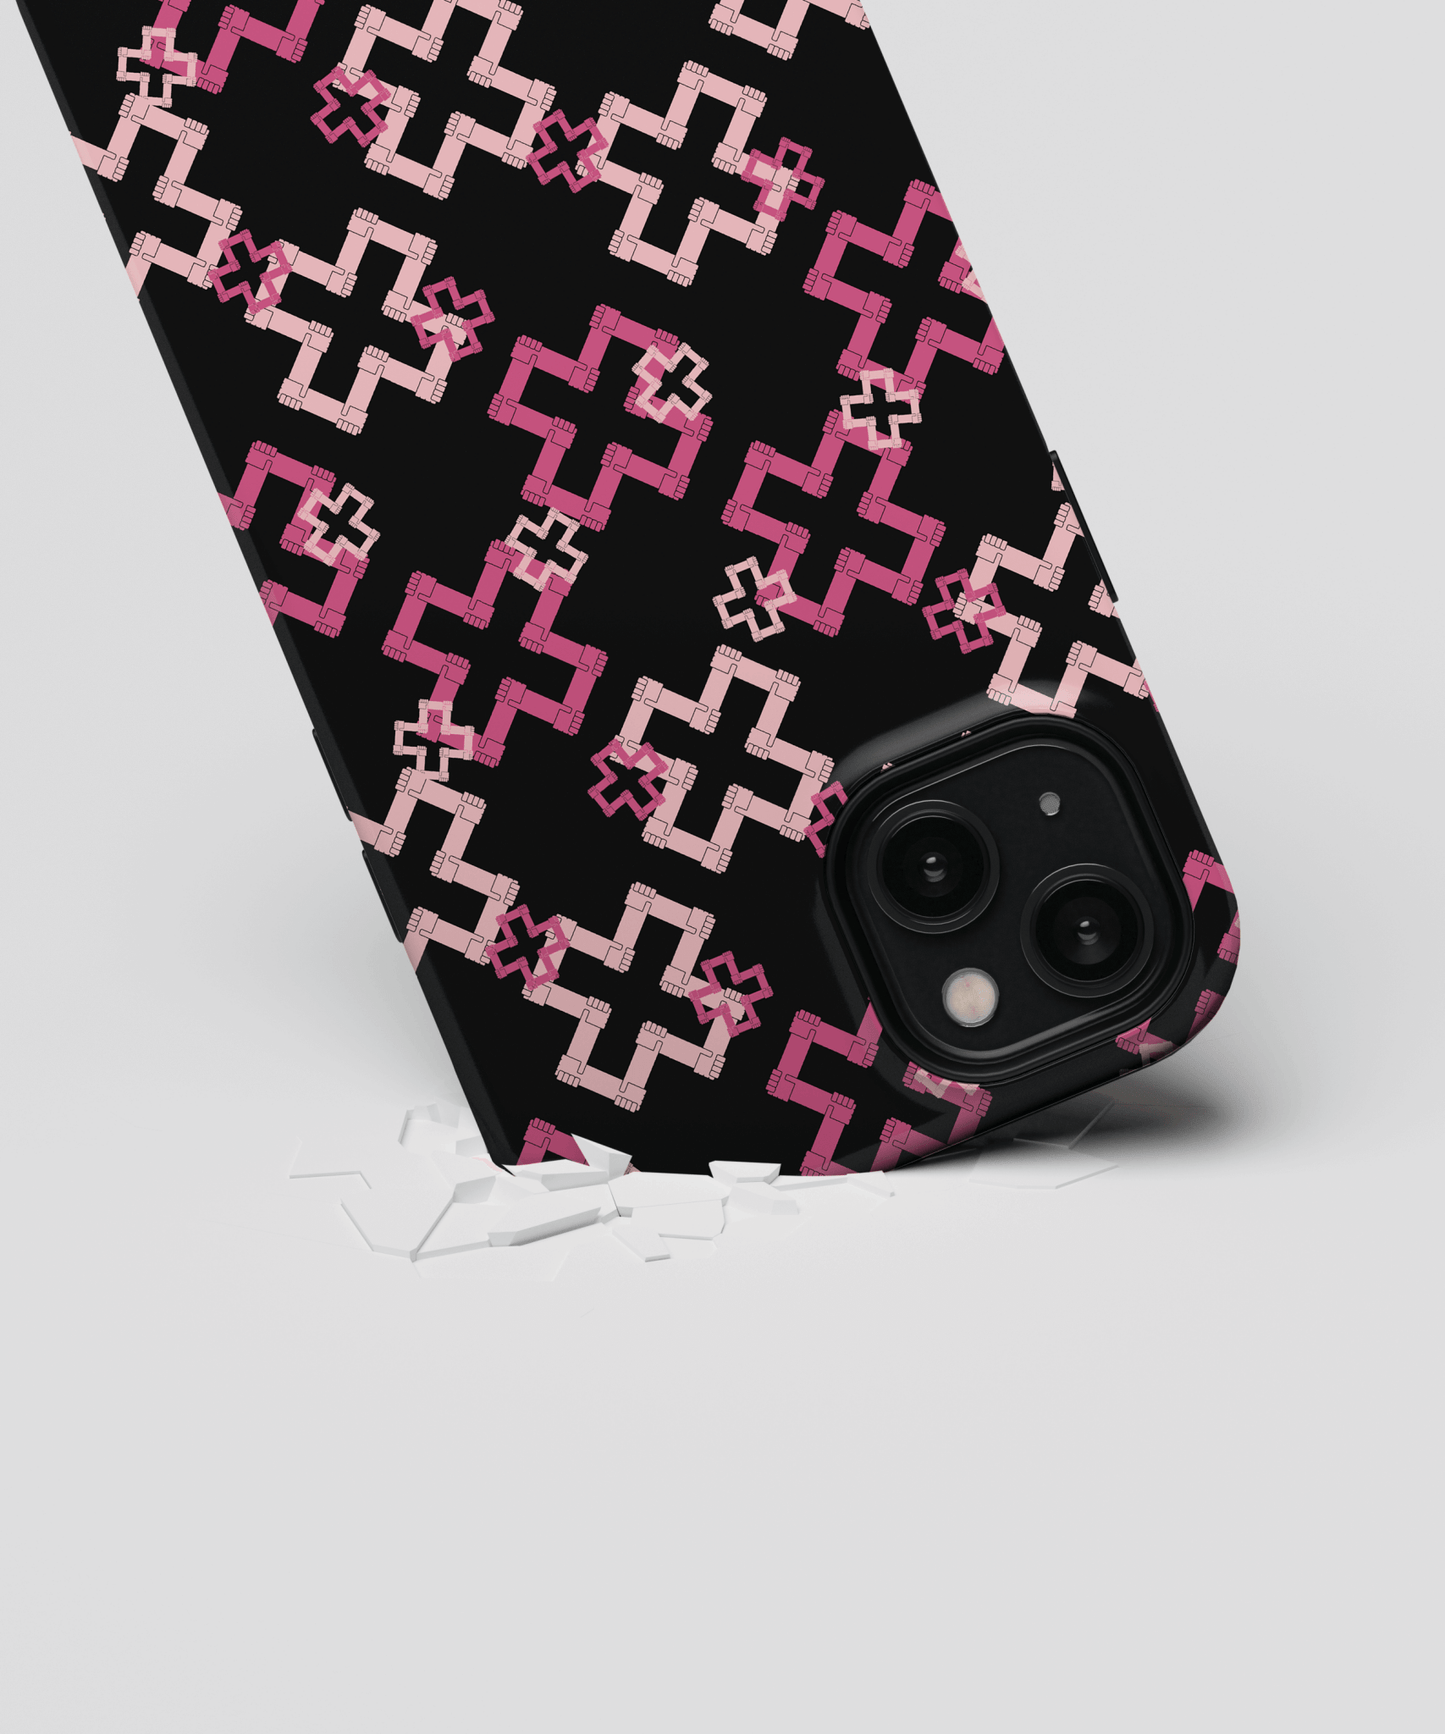 Affection - iPhone SE (2016) telefono dėklas - Coveris